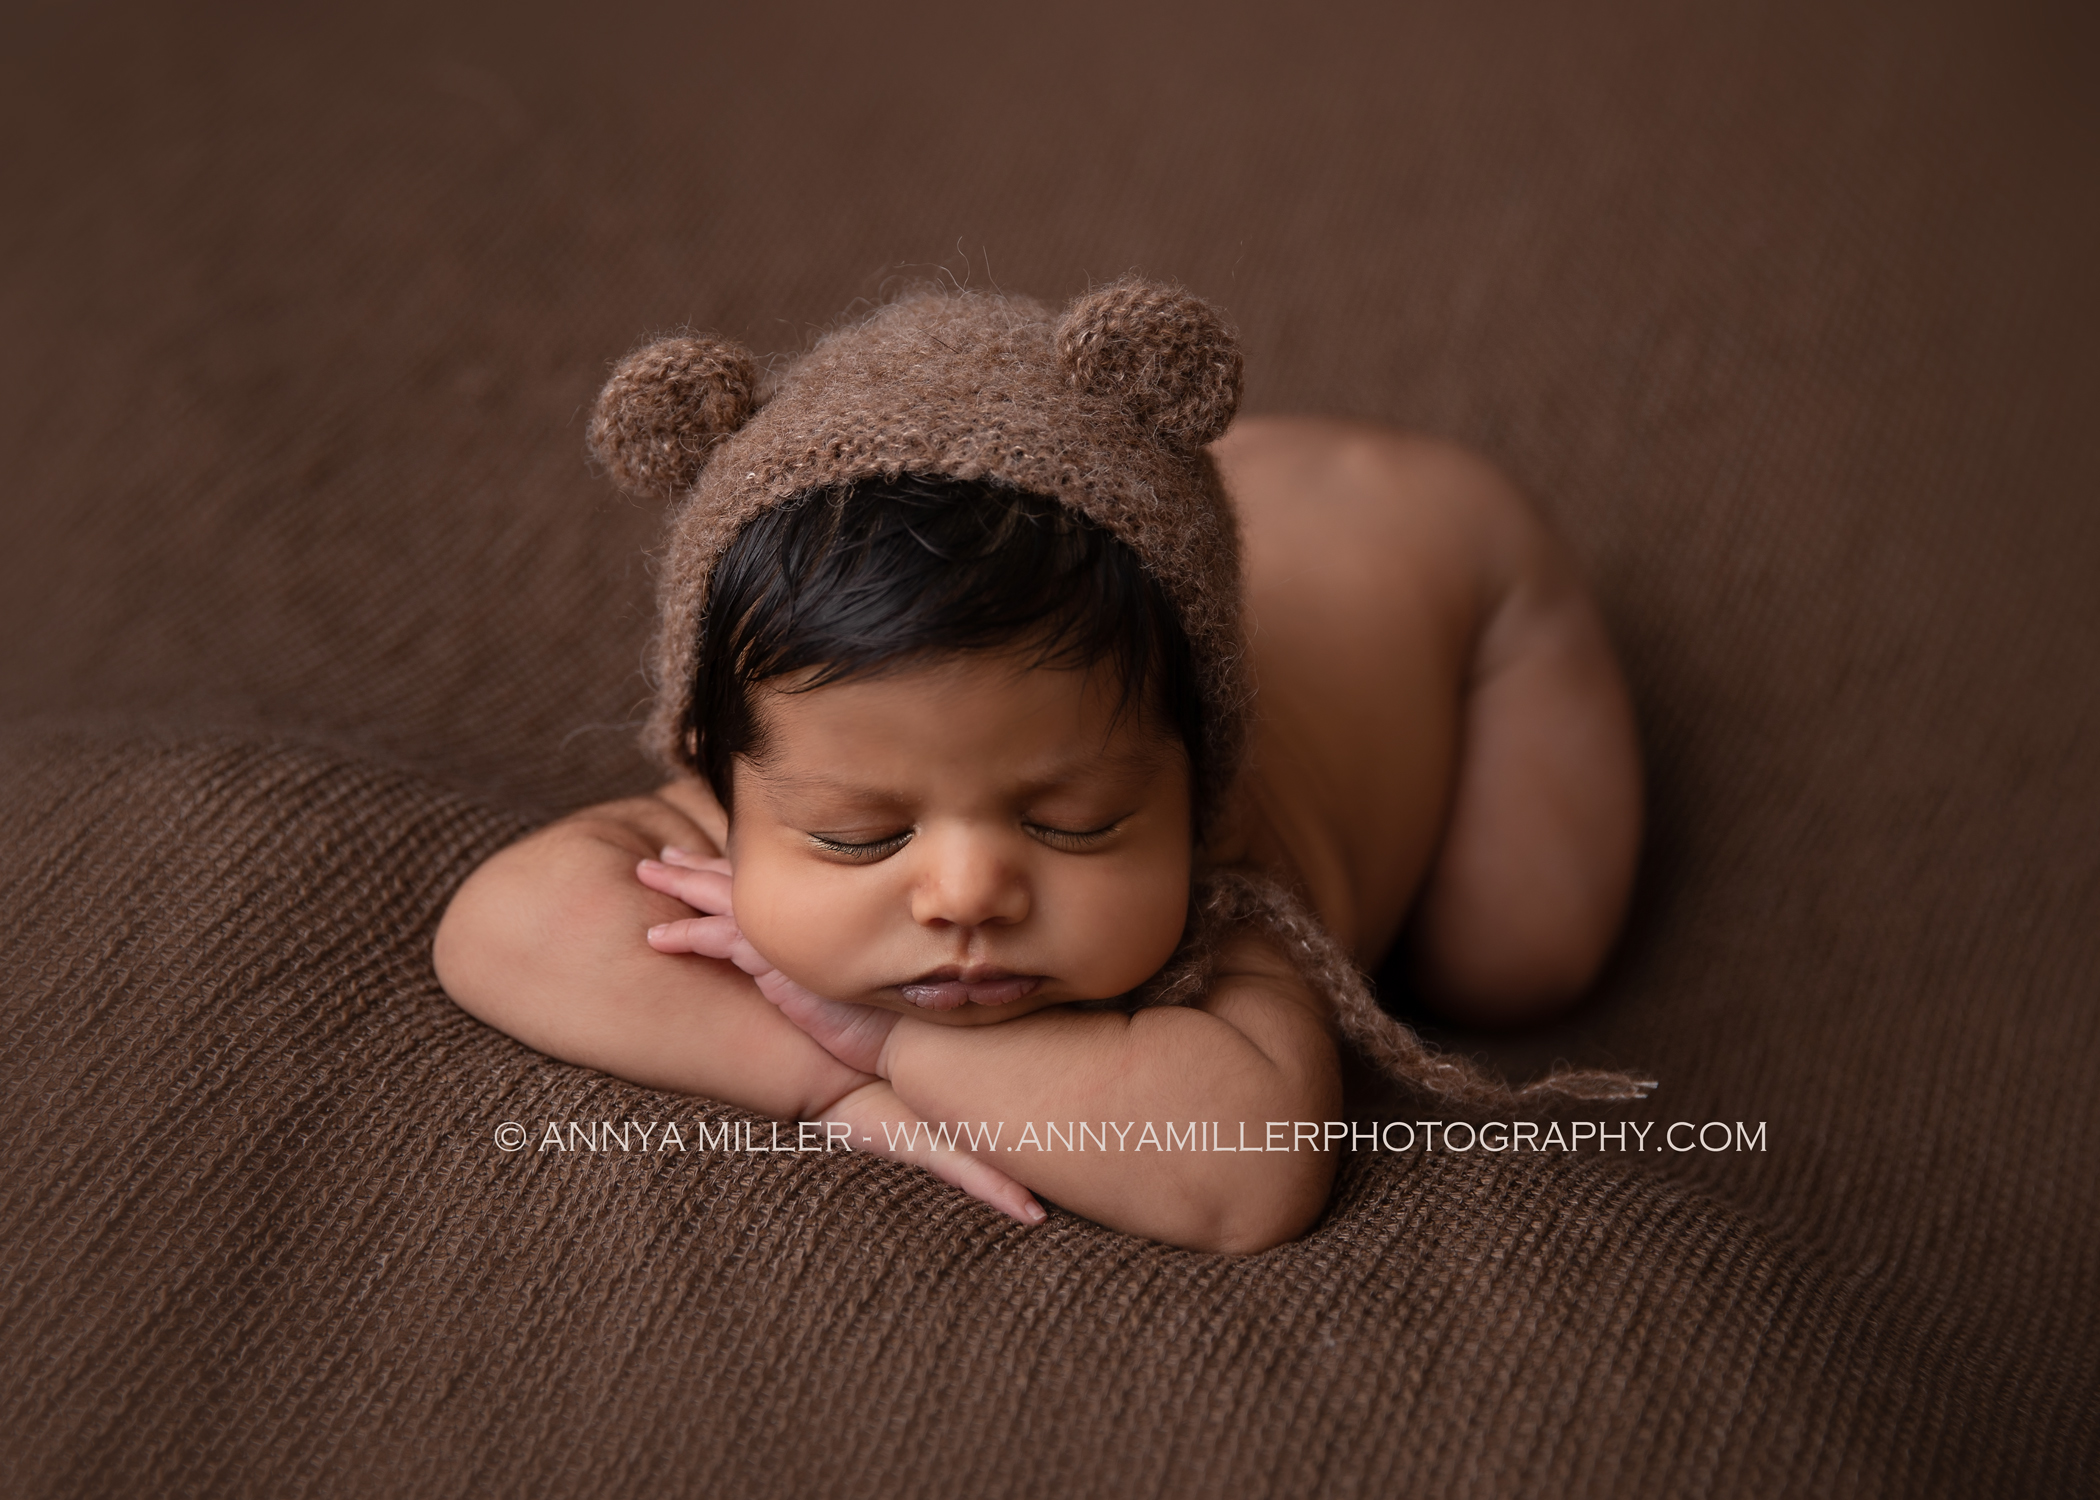 Durham newborn photos of baby boy in bear bonnet by Annya Miller photography